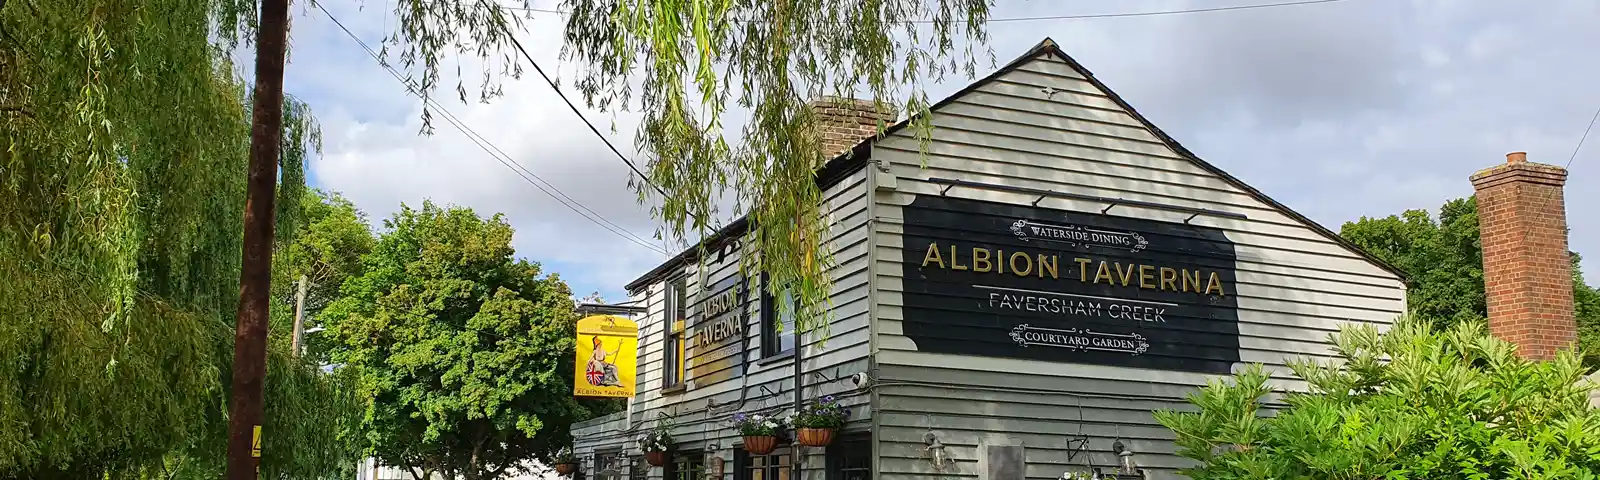 Albion Taverna